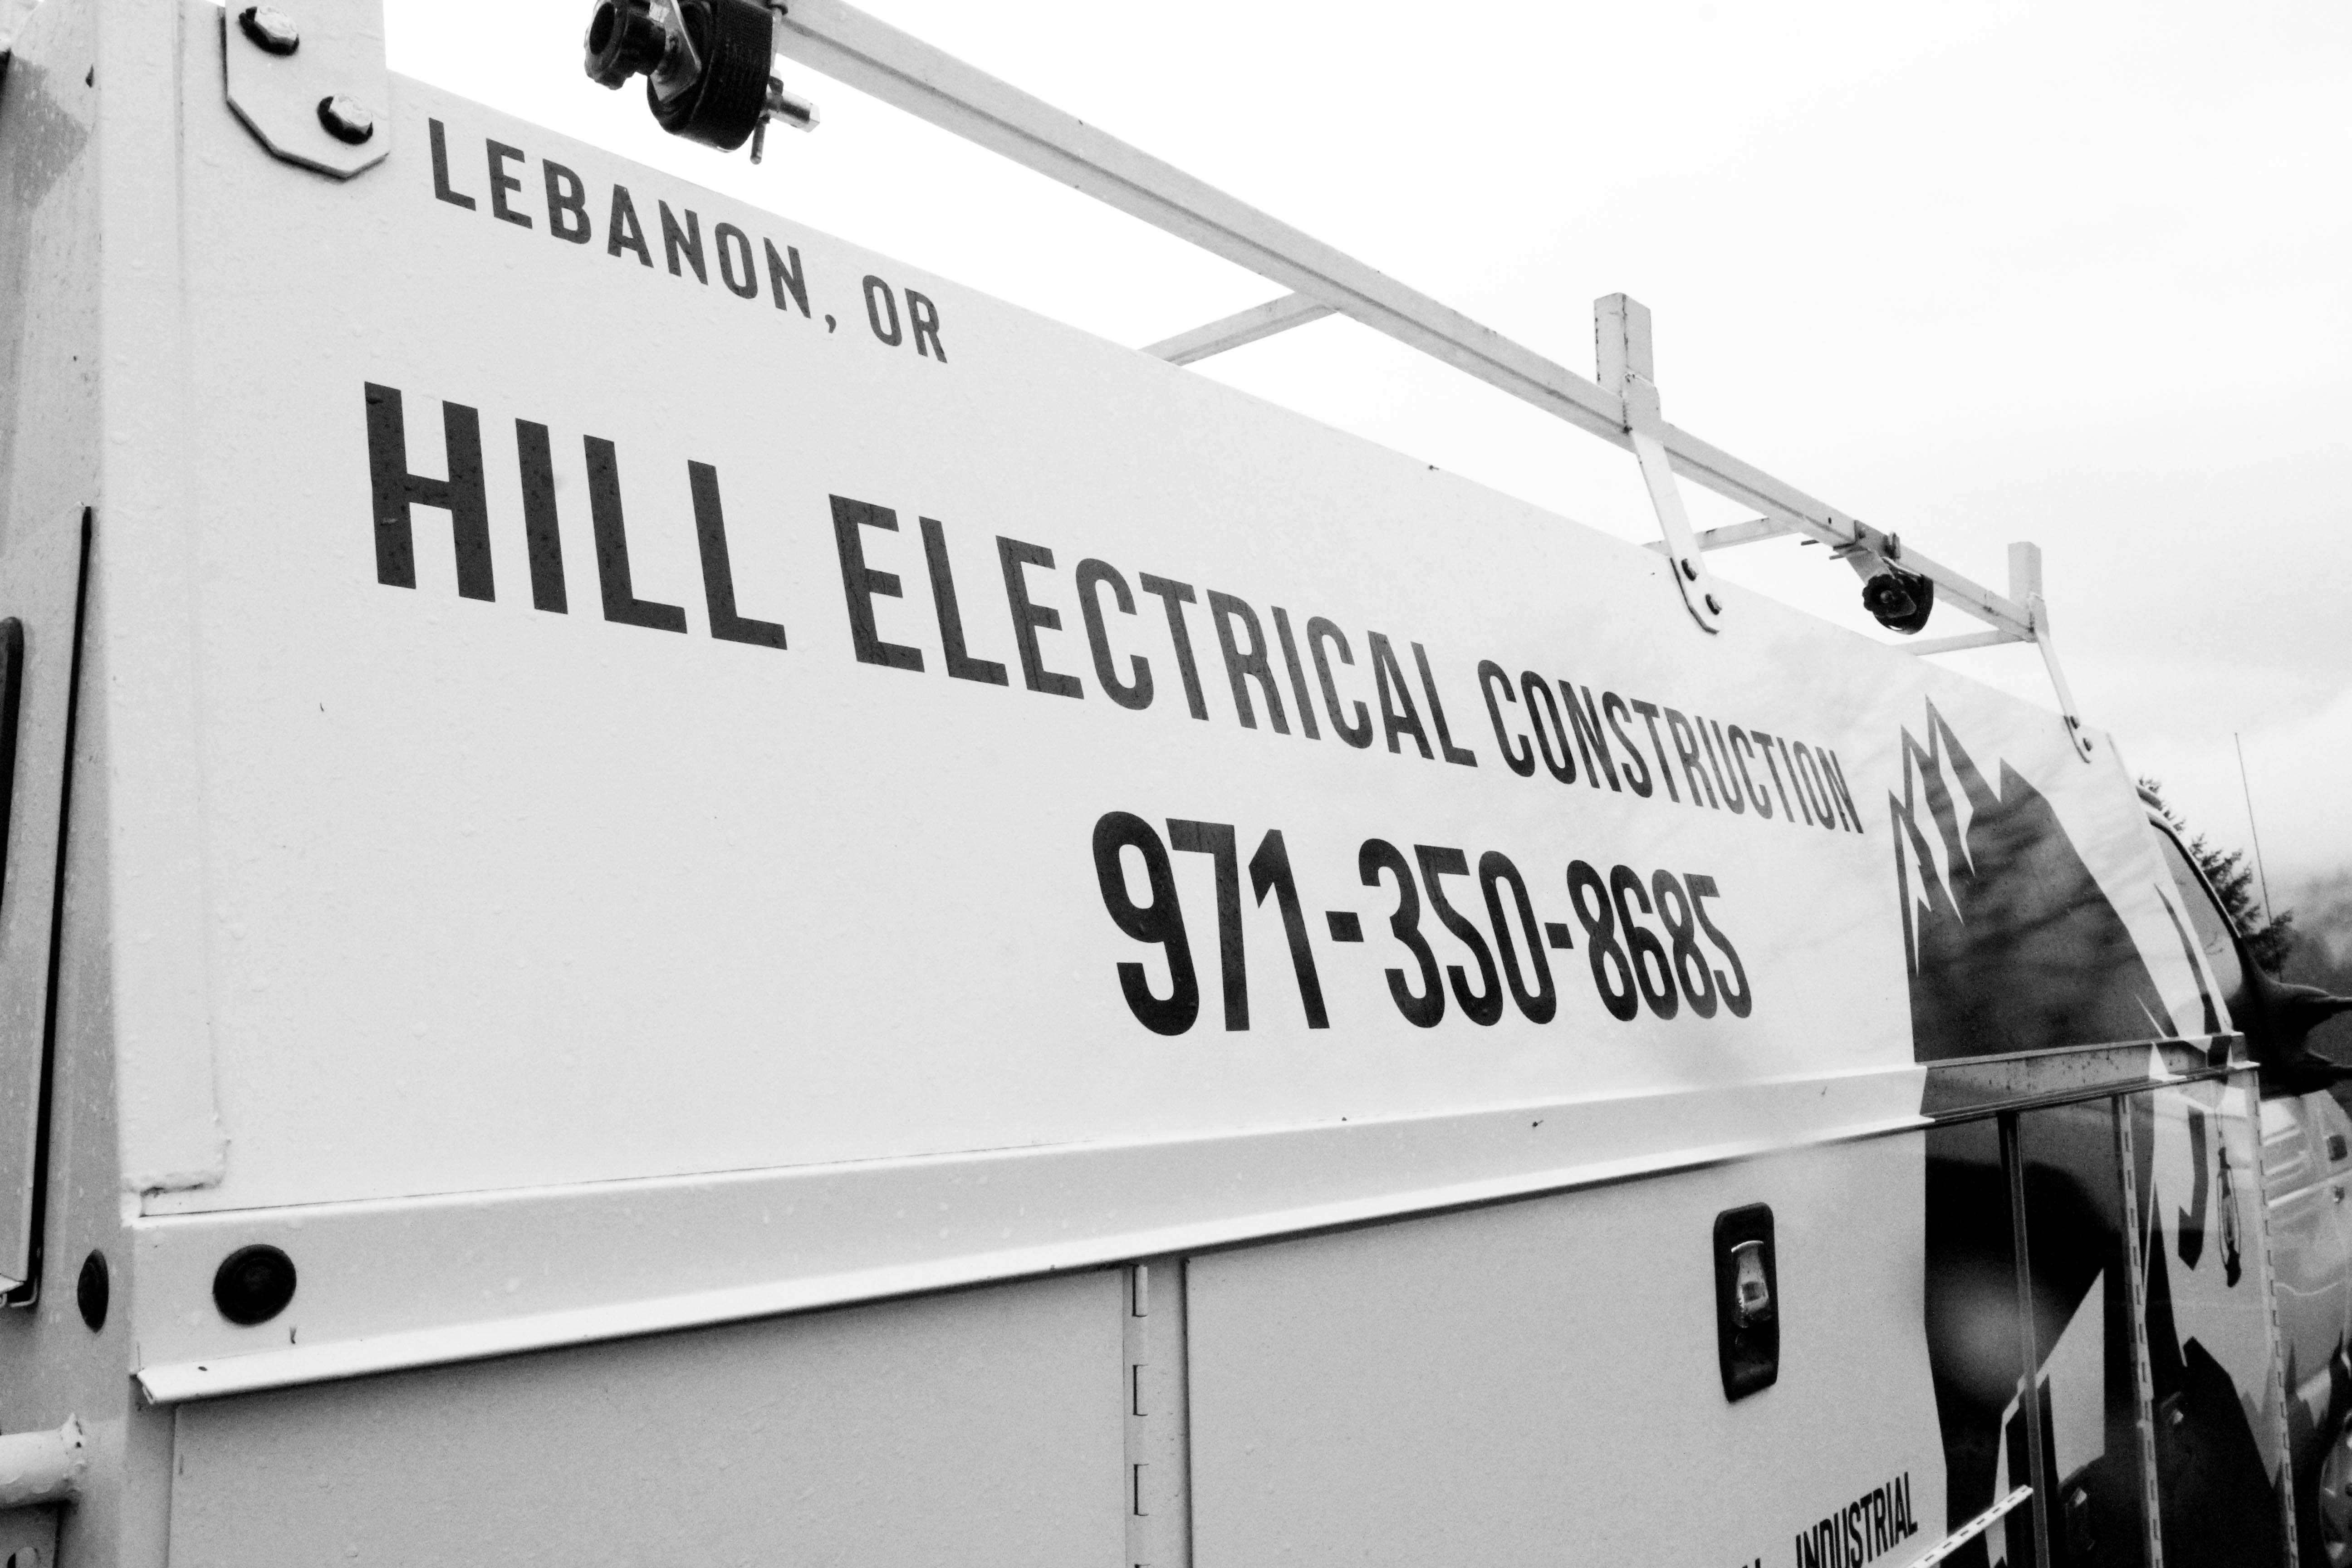 Lebanon Electrical Contractors